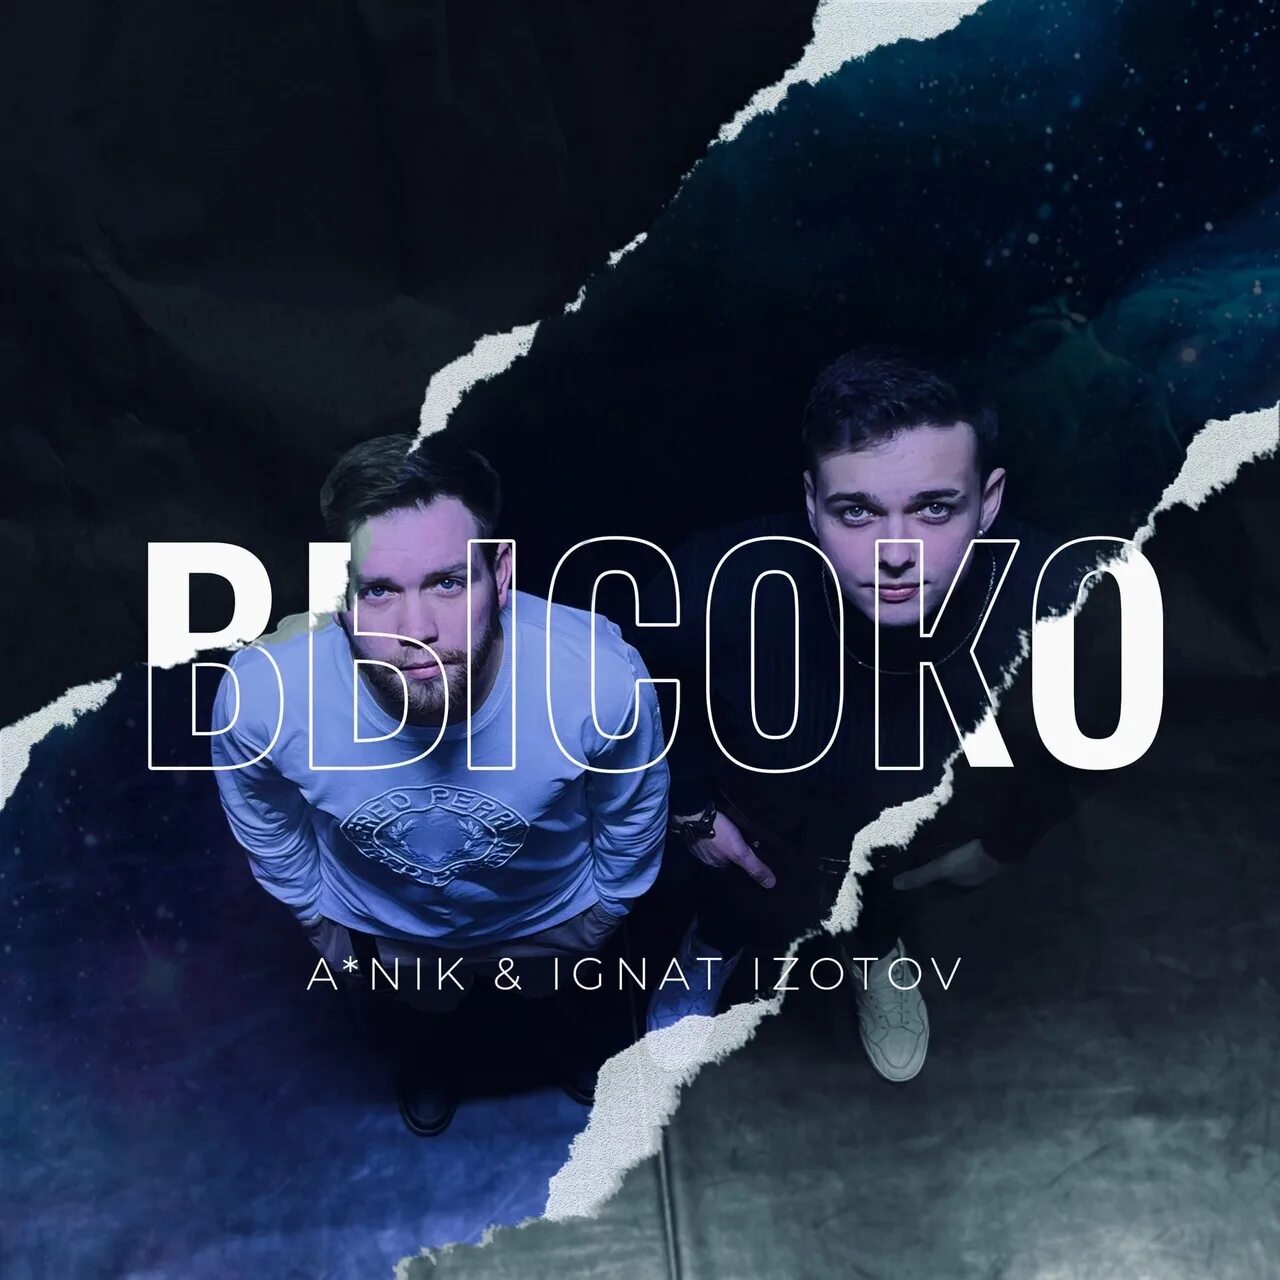 A’Nik & Ignat Izotov. A'Nik & Ignat Izotov артист. "Ignat Izotov" && ( исполнитель | группа | музыка | Music | Band | artist ) && (фото | photo).